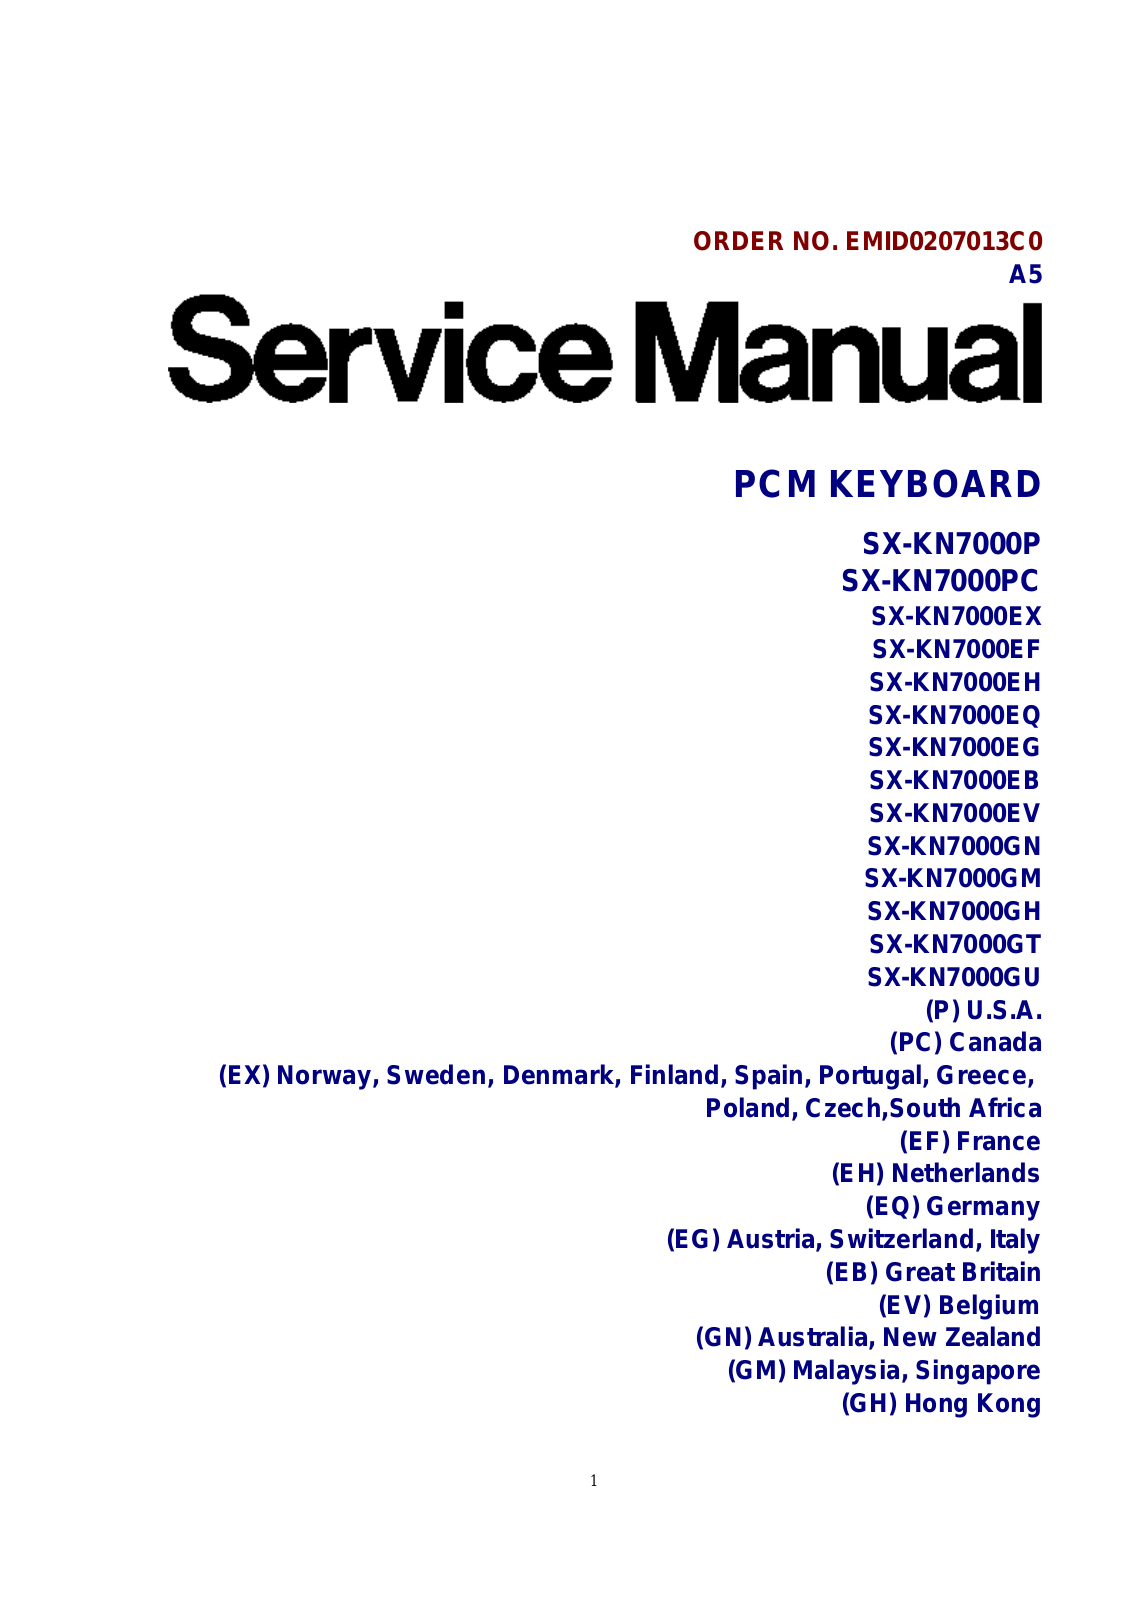 Technics SX-KN7000GU, SX-KN7000GT, SX-KN7000GH, SX-KN7000GM, SX-KN7000GN Service Manual